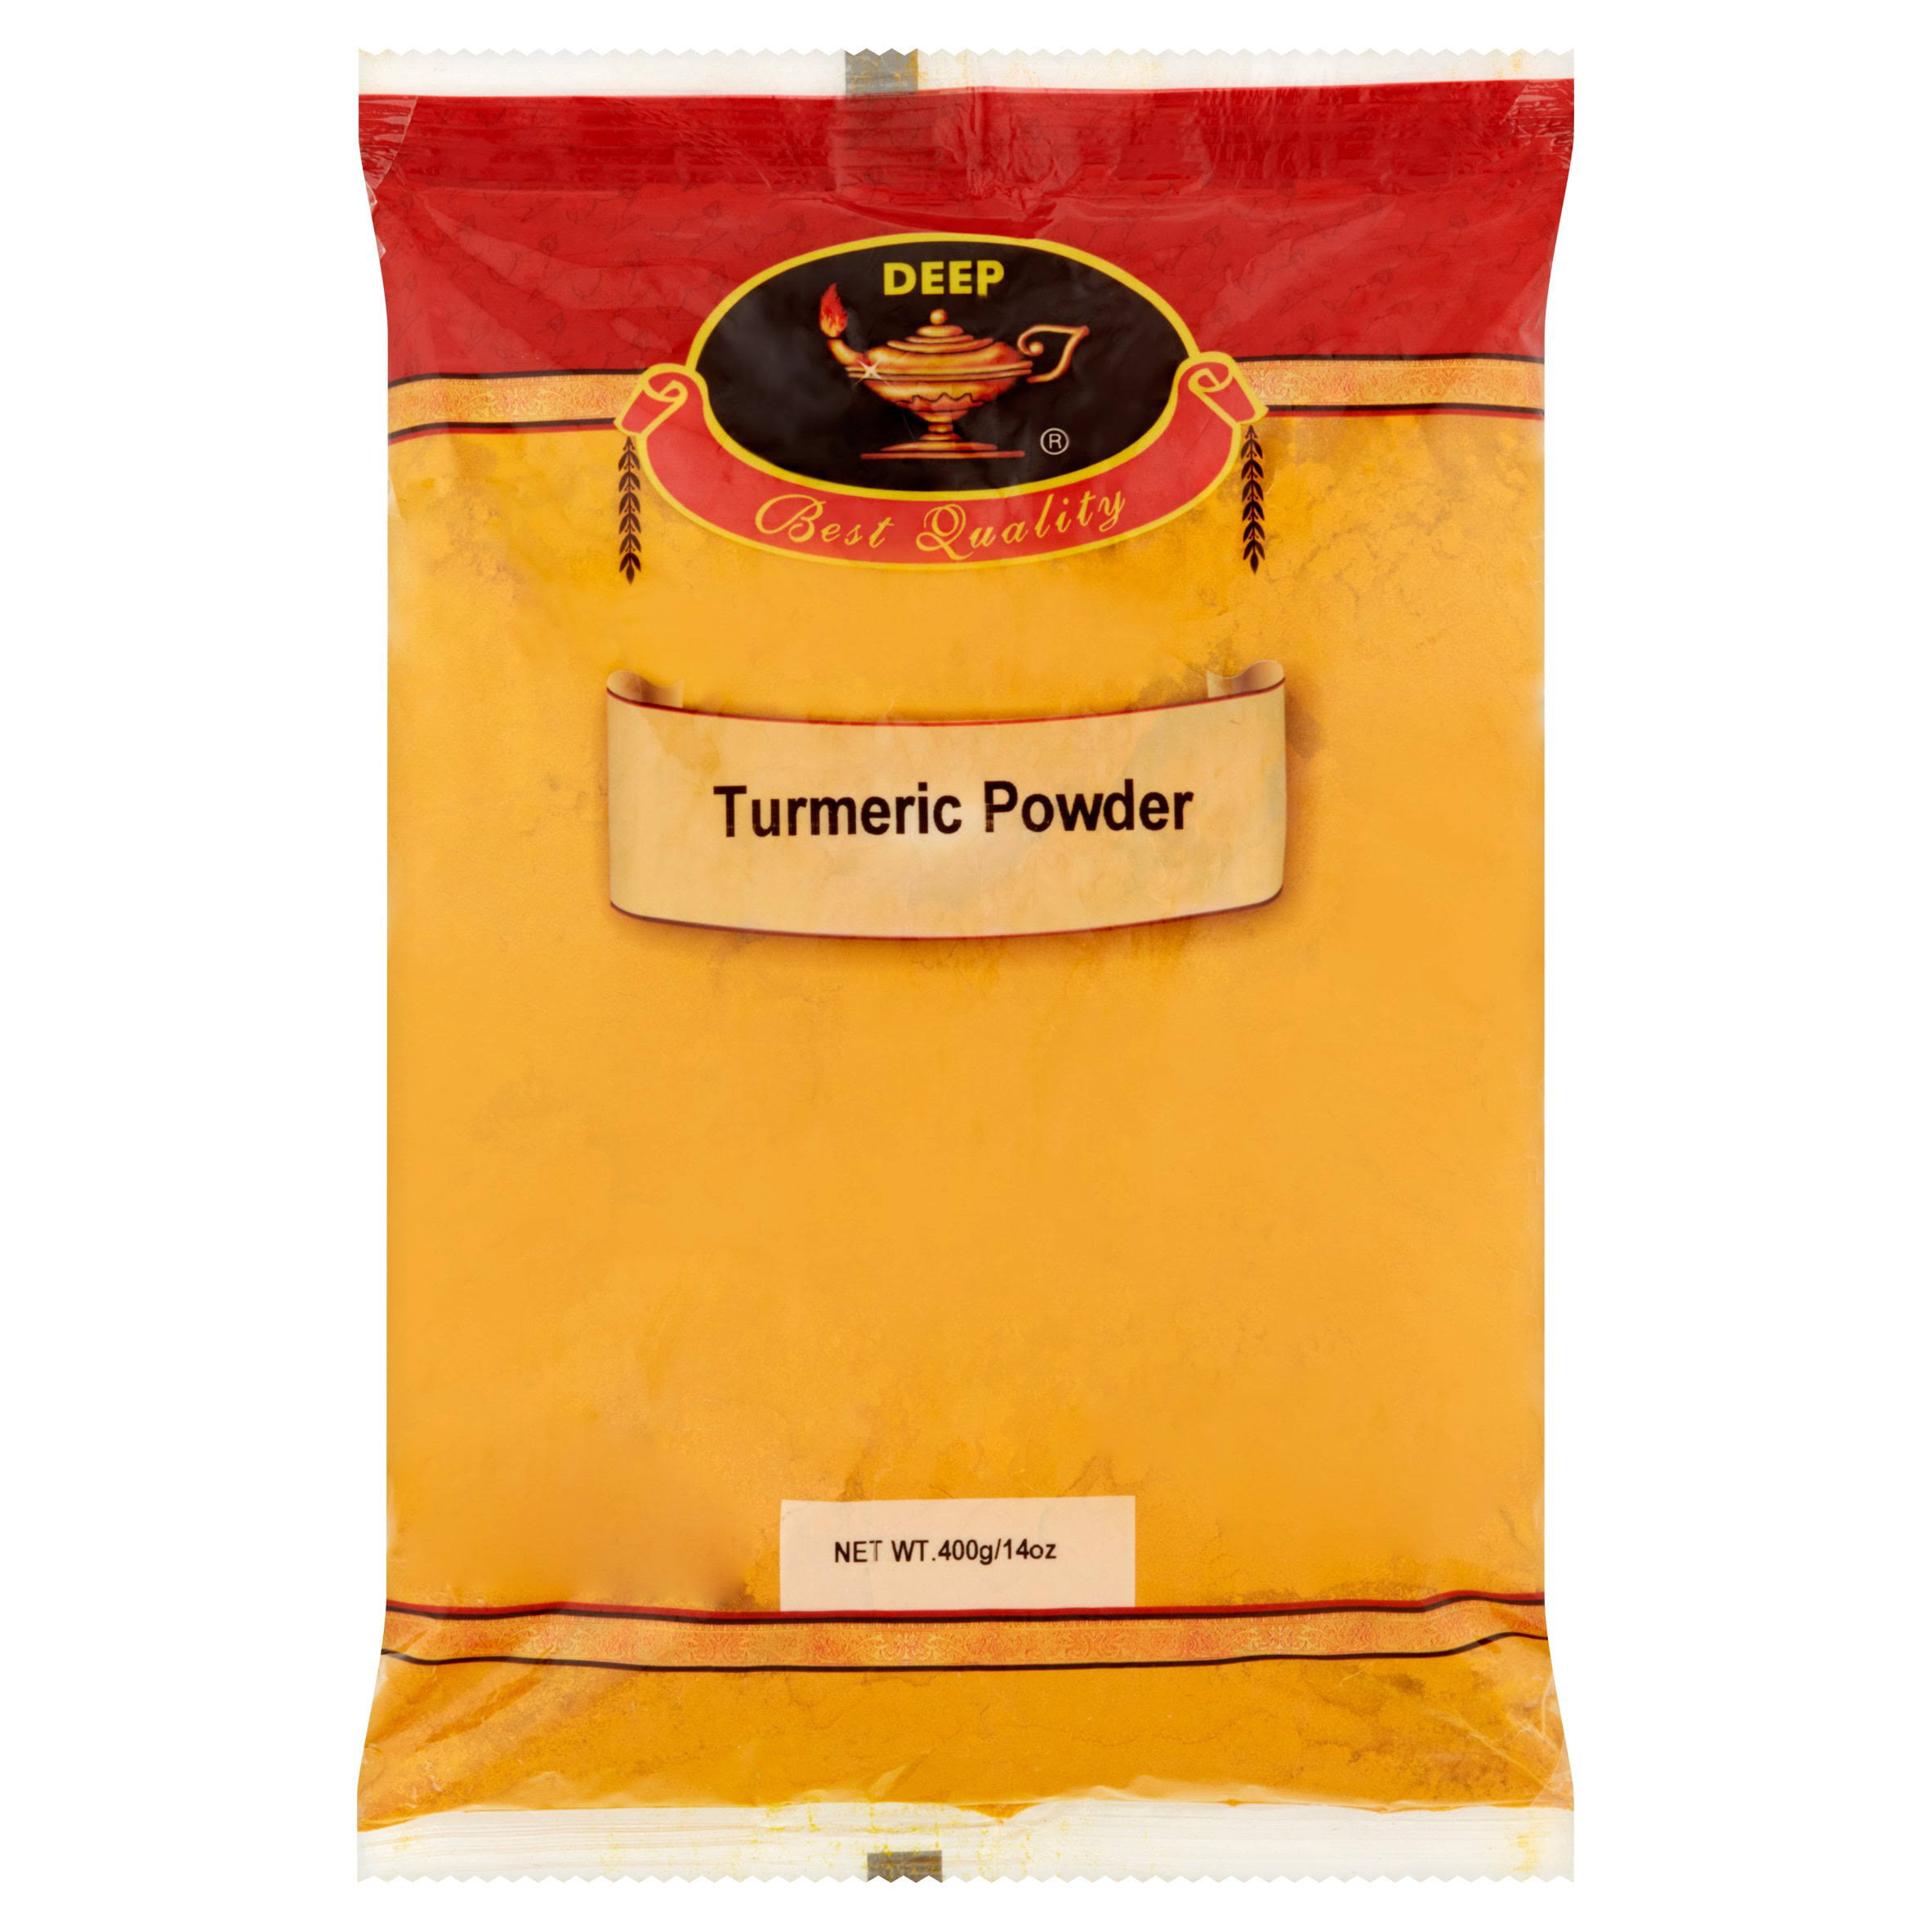 Deep Turmeric Powder - 14oz